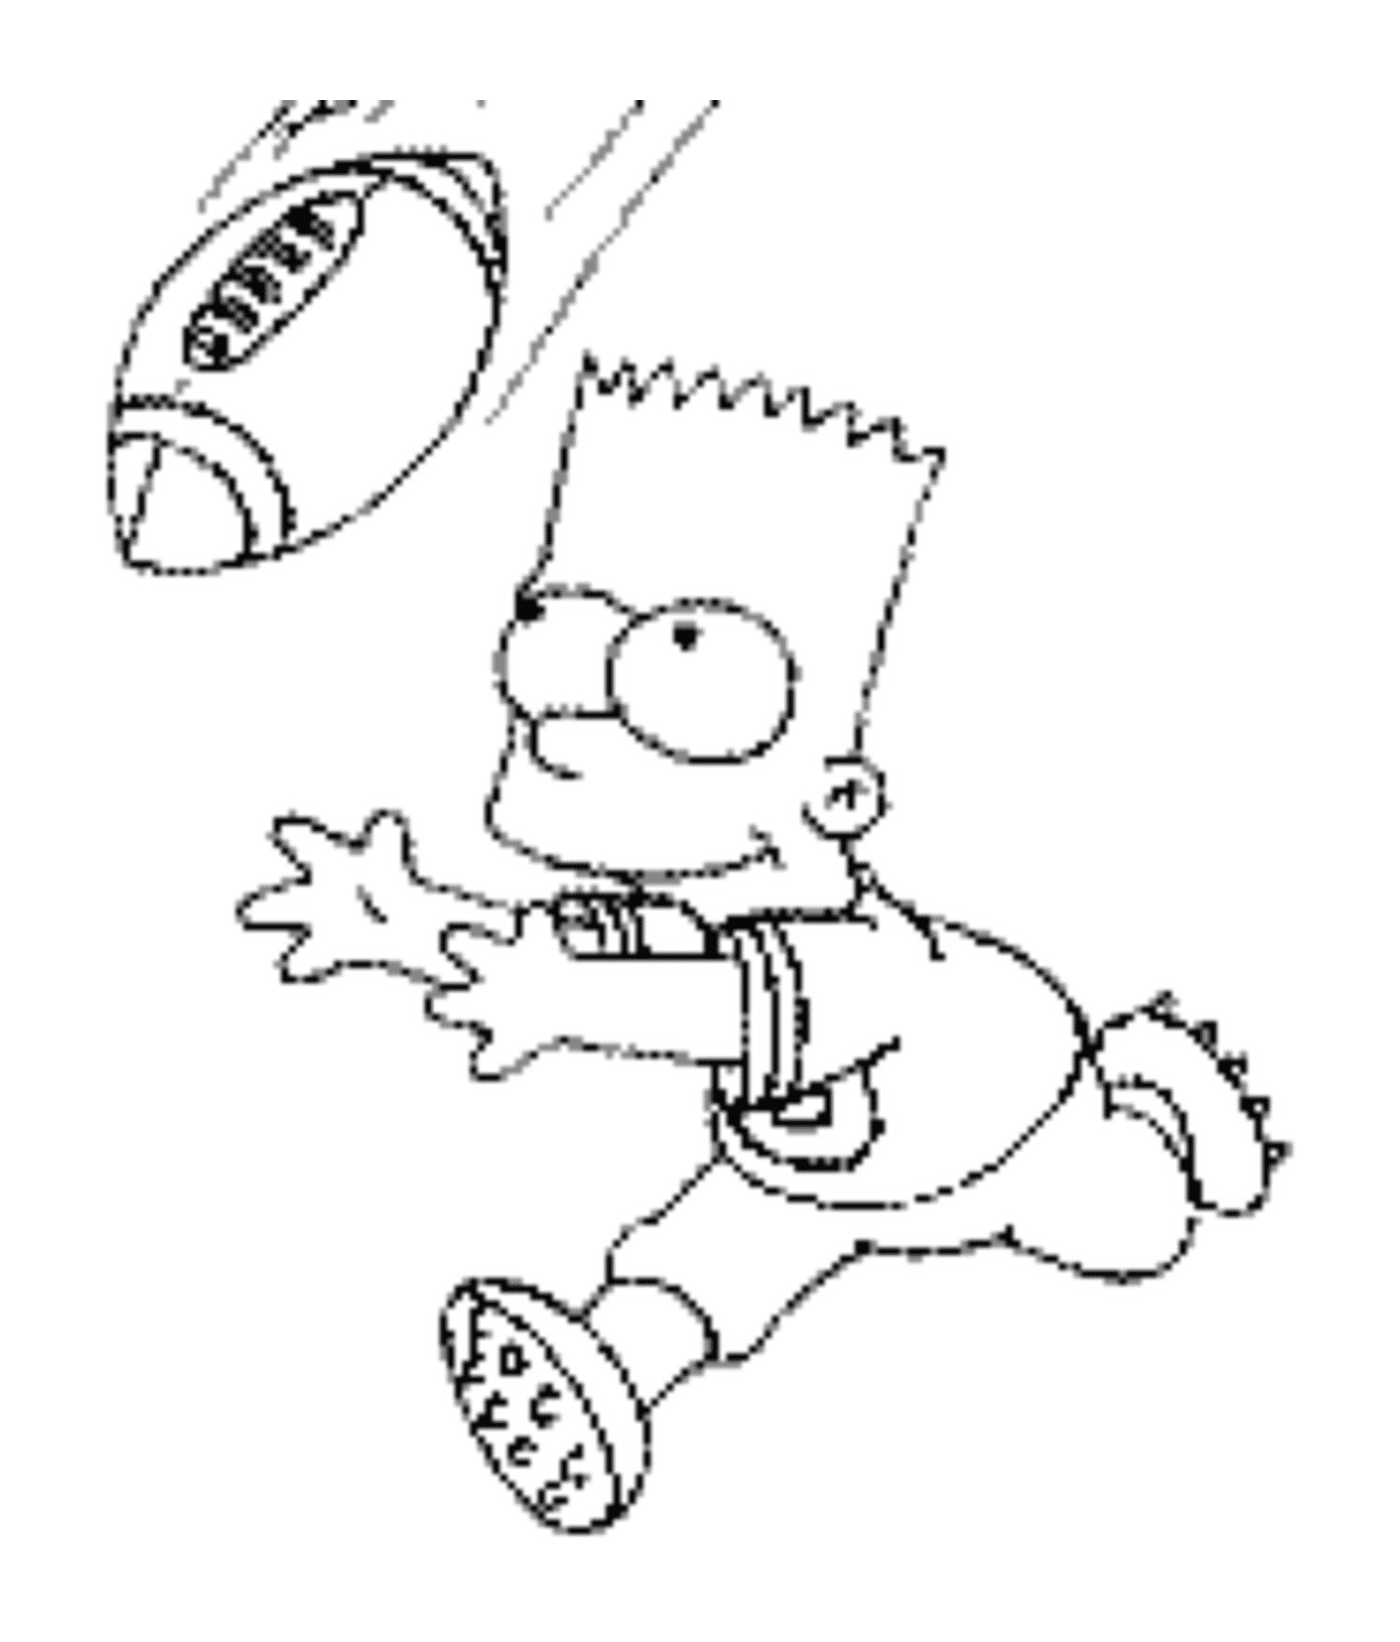  Bart gioca a football americano 